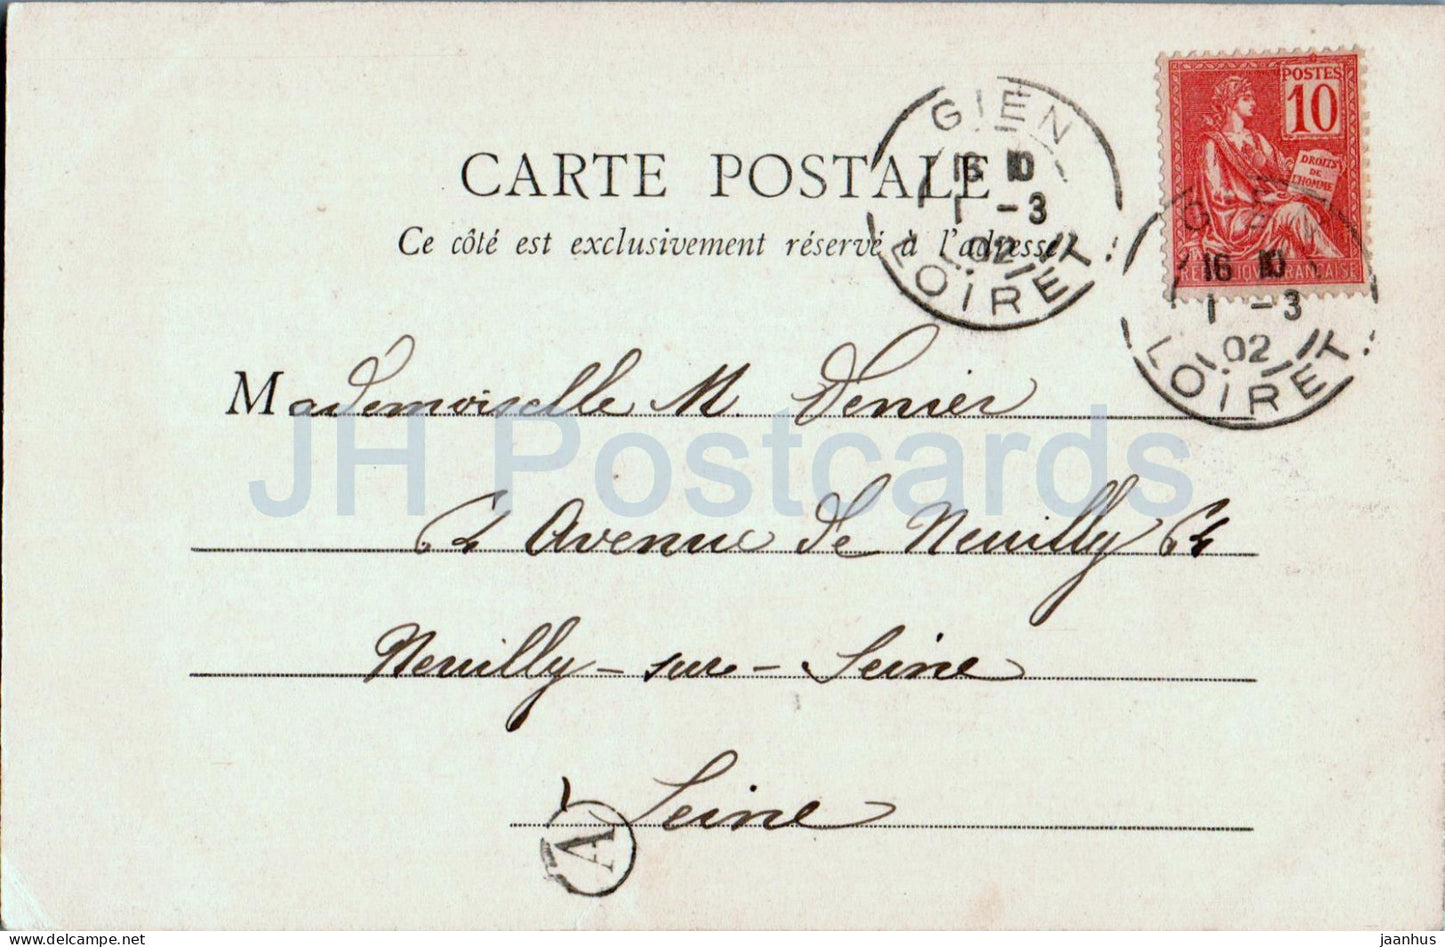 Briare - Pont Canal - Brücke - 1 - alte Postkarte - 1902 - Frankreich - gebraucht 